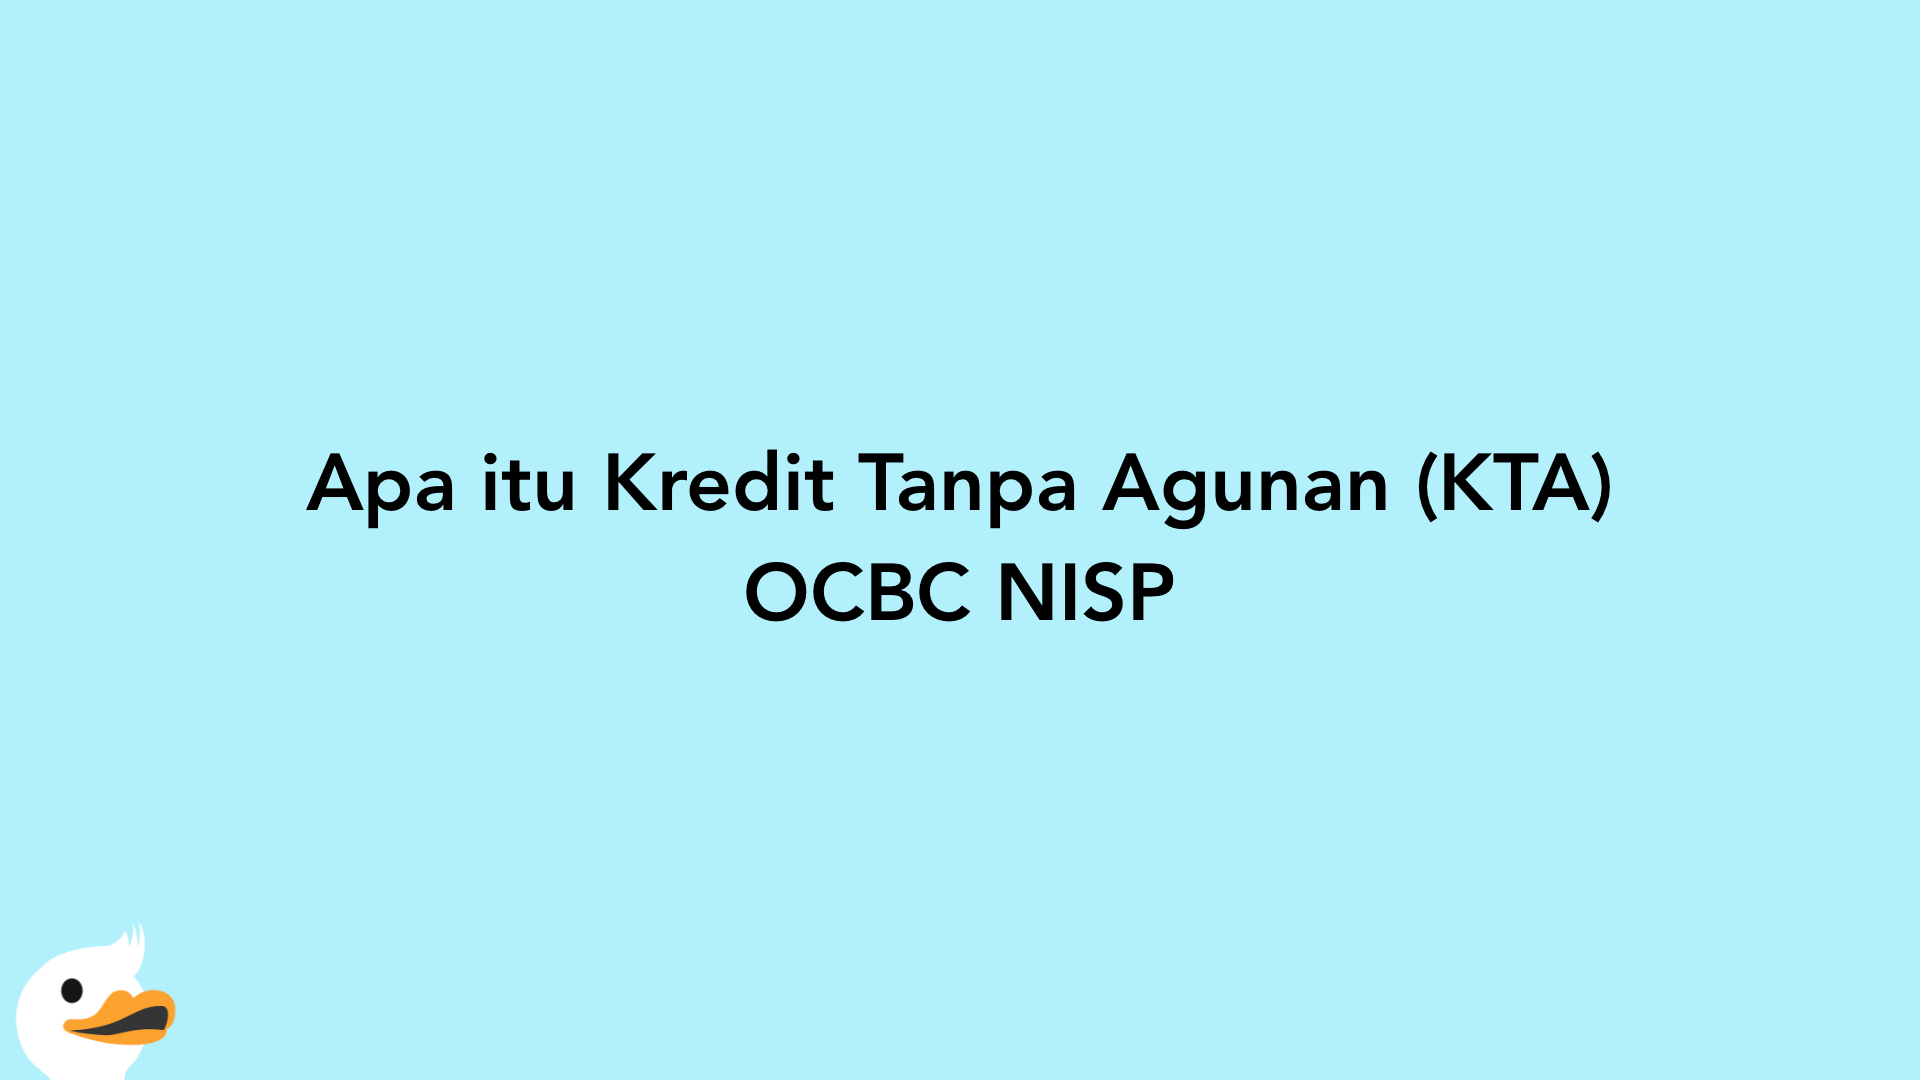 Apa itu Kredit Tanpa Agunan (KTA) OCBC NISP